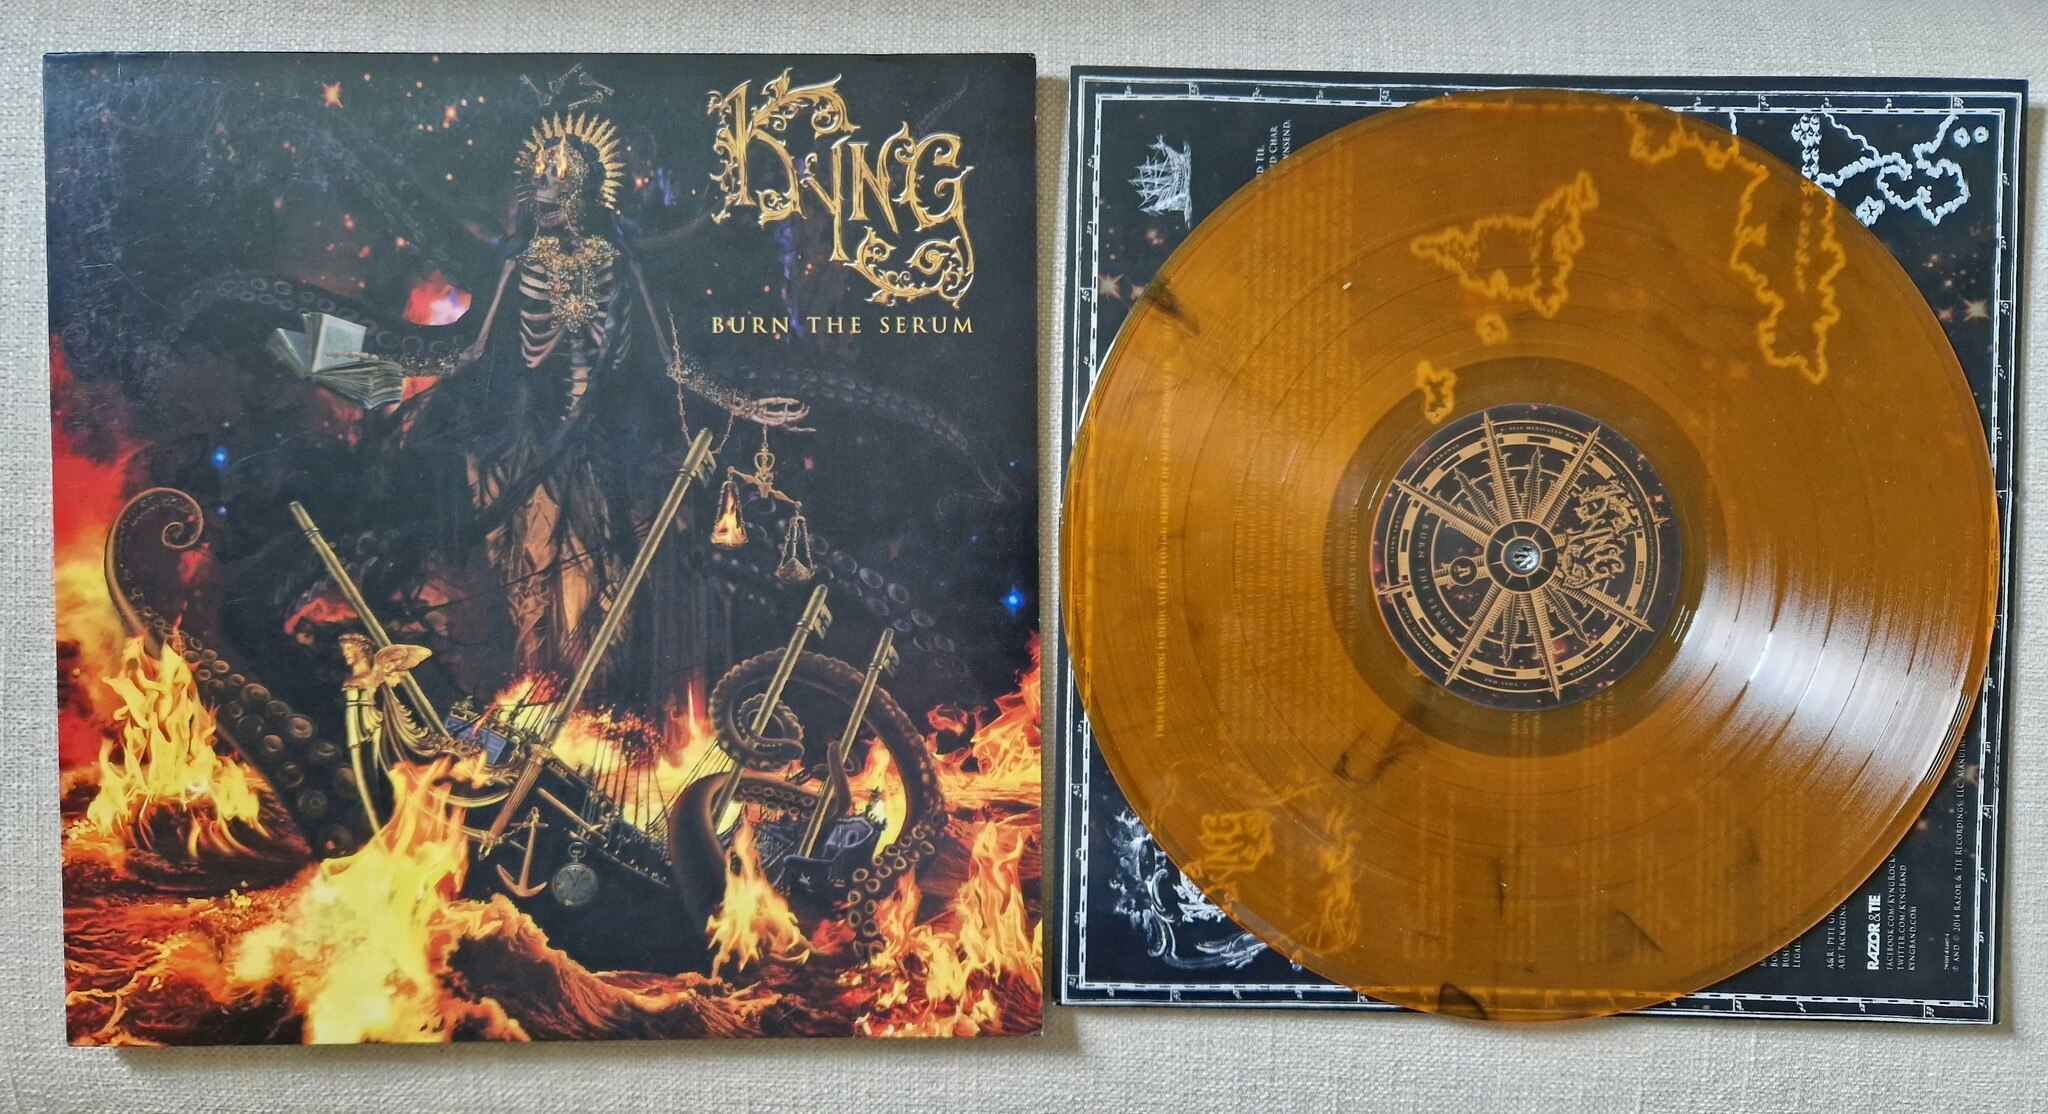 Kyng, Burn the serum (Gold edt). Vinyl LP